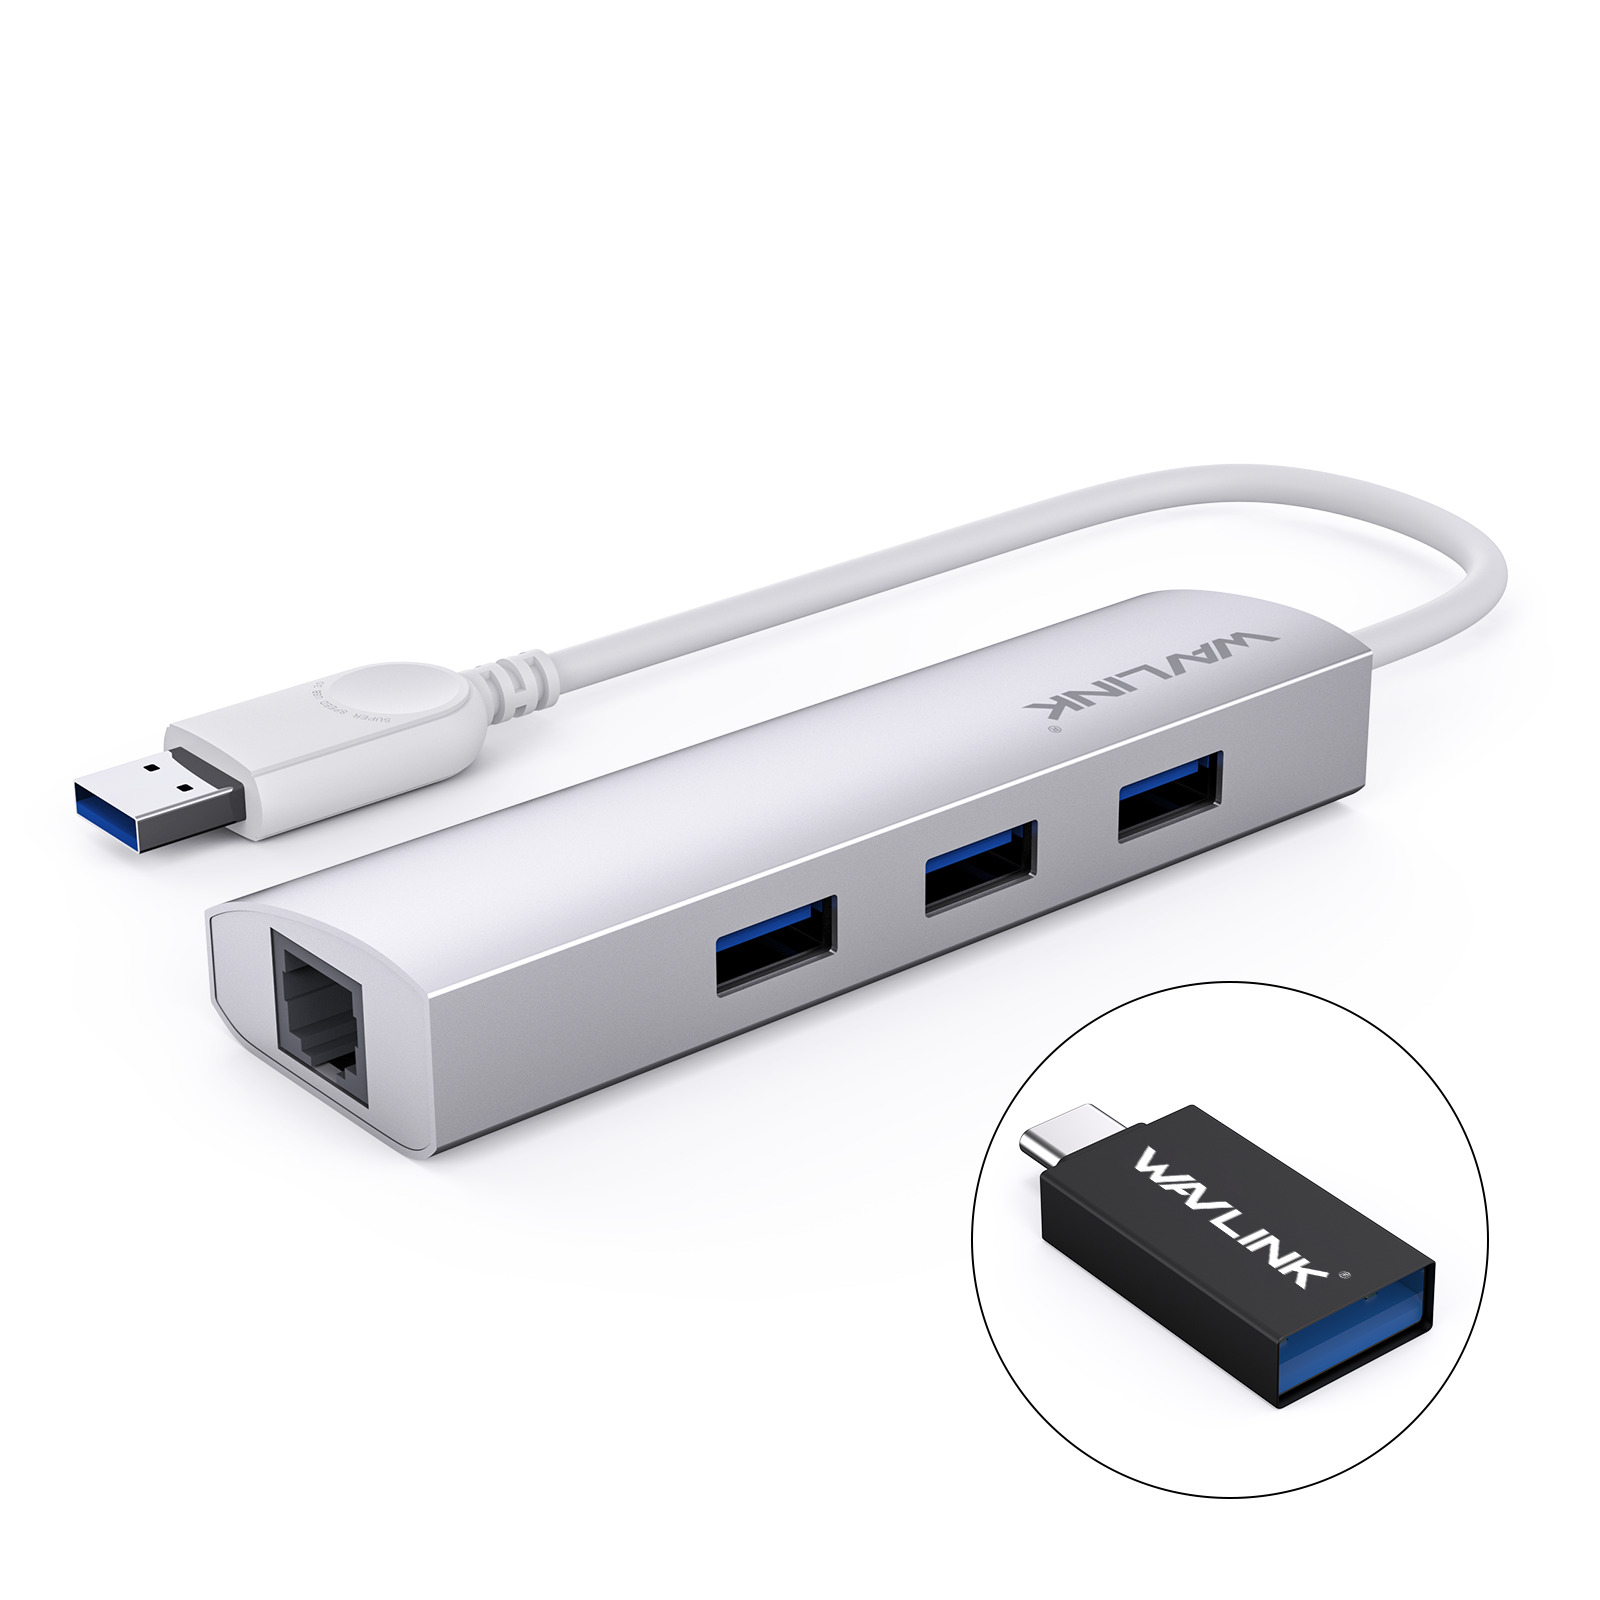 4-Port USB 3.0 Hub Multiport Adapter with RJ45 Gigabit Ethernet for Mac PC XPS